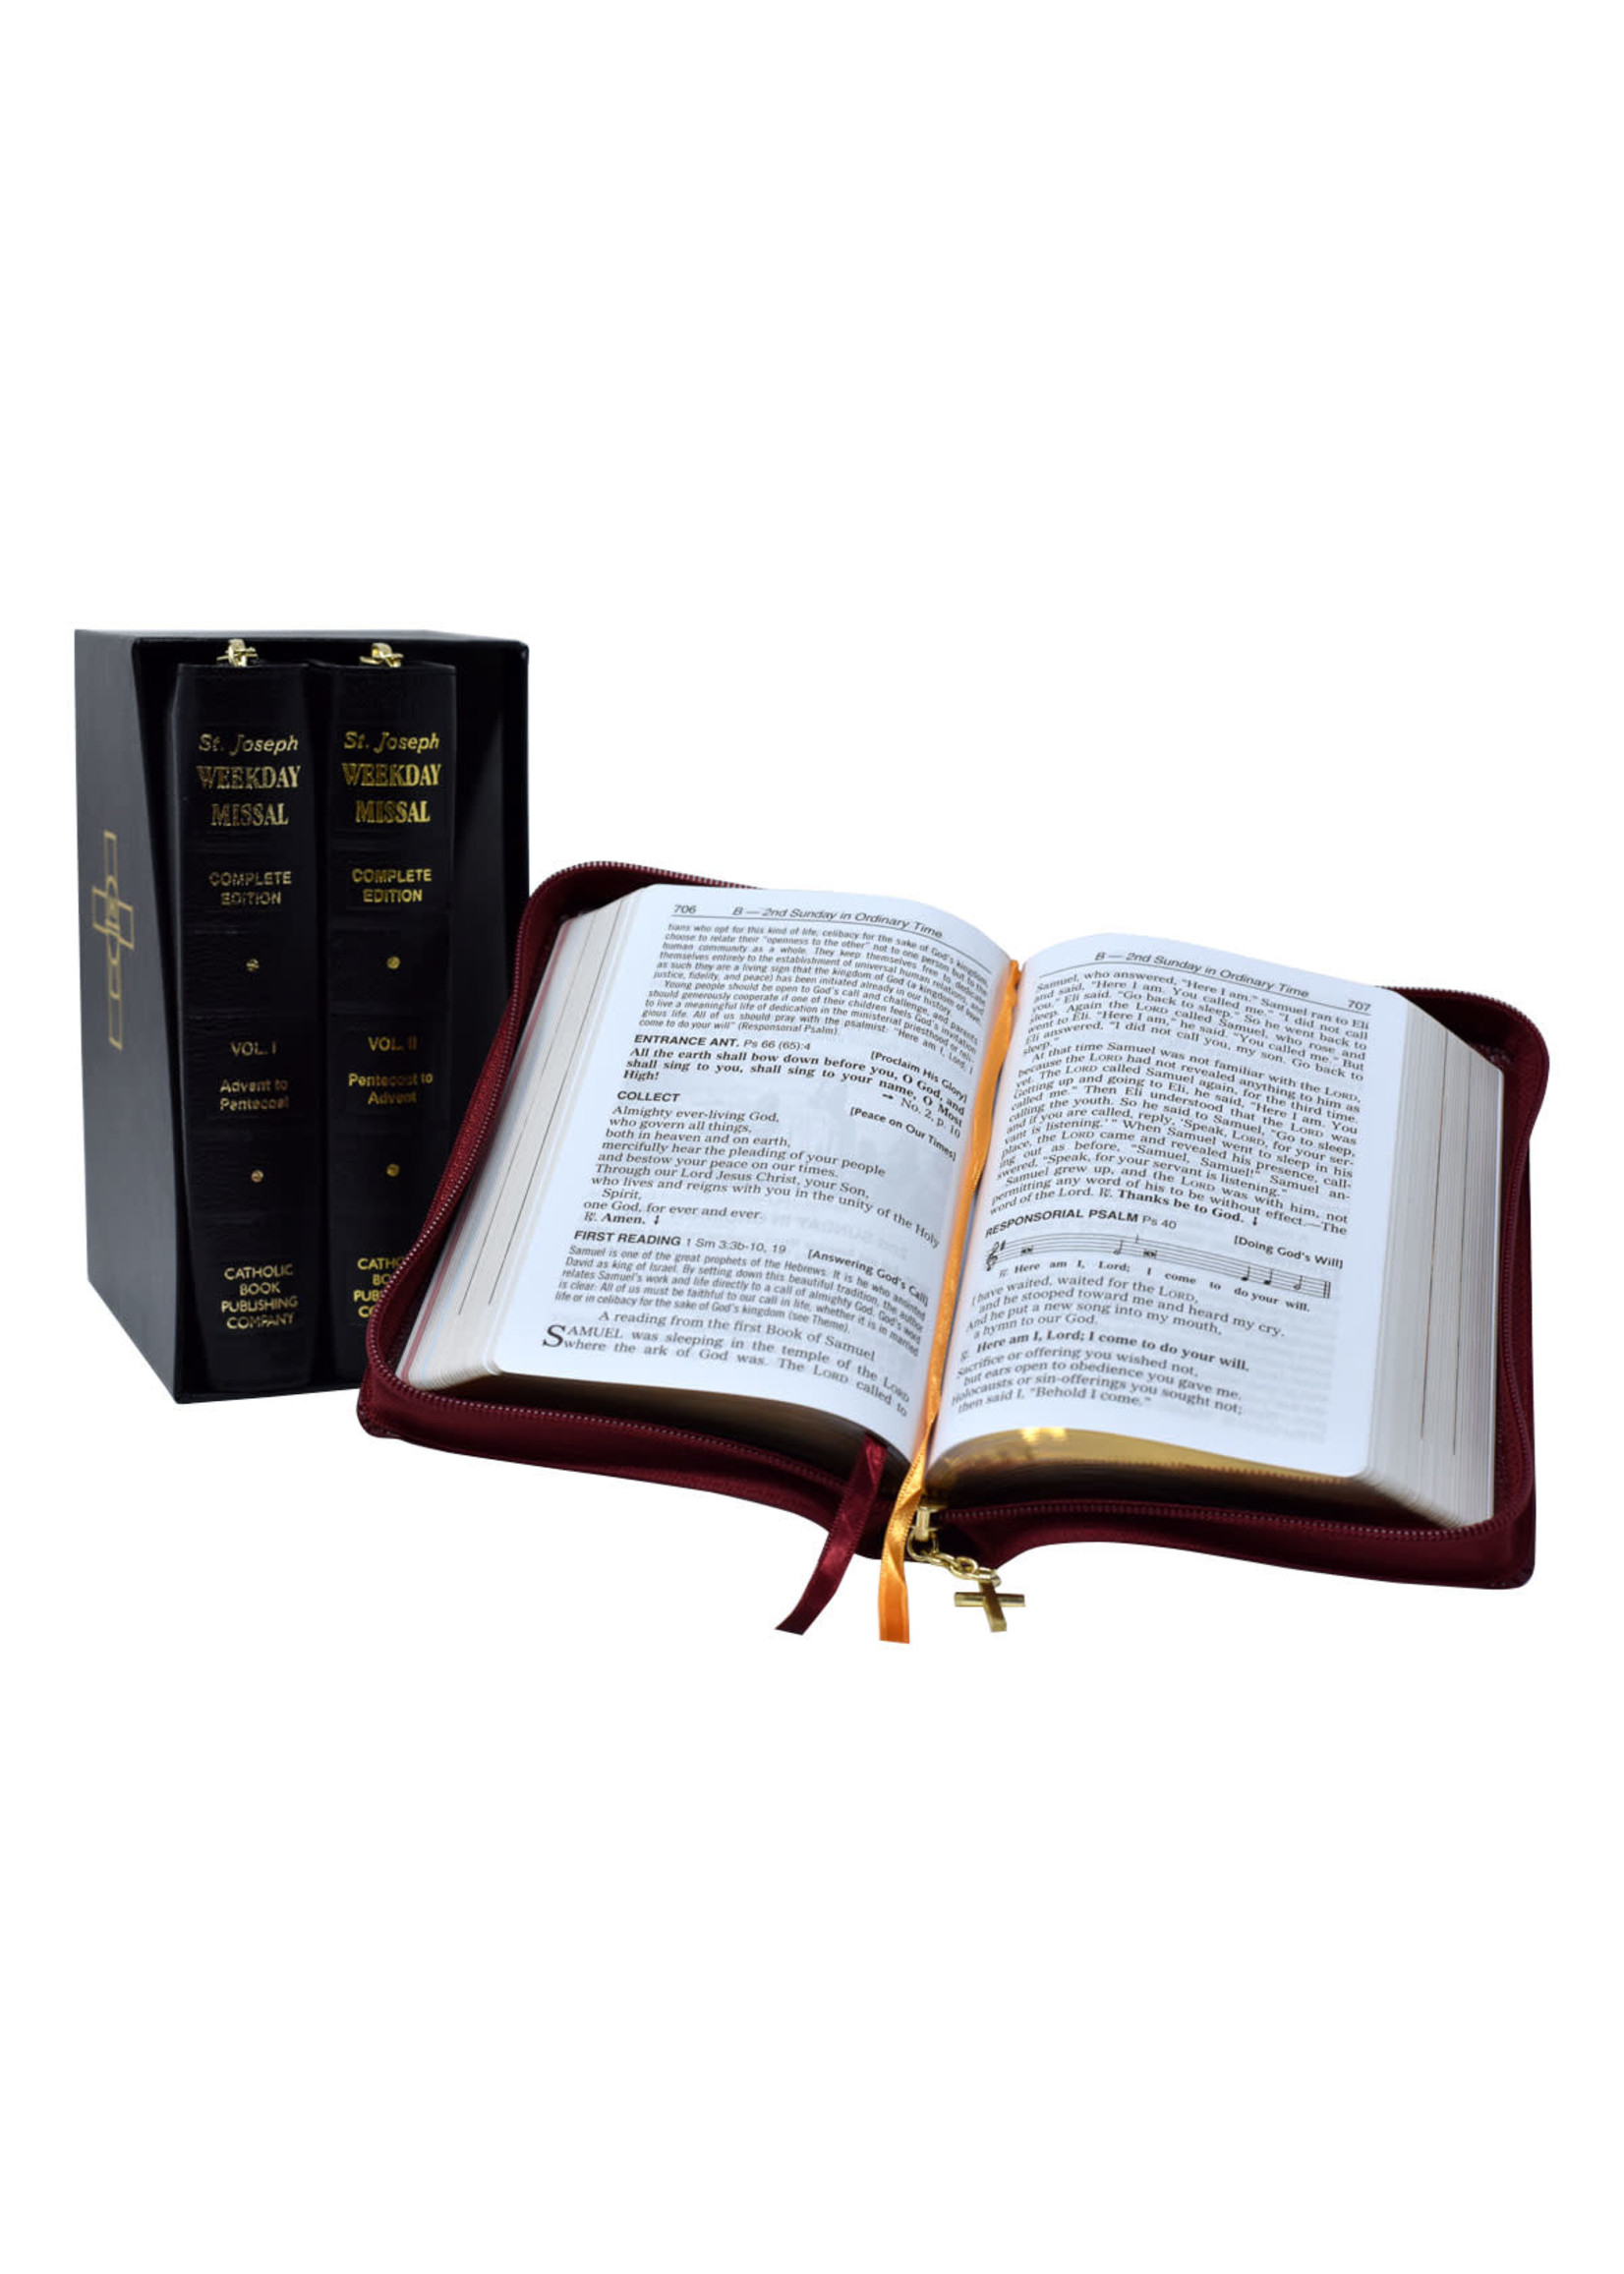 St Joseph Daily & Sunday Missals Complete Gift Box 3-Volume Set